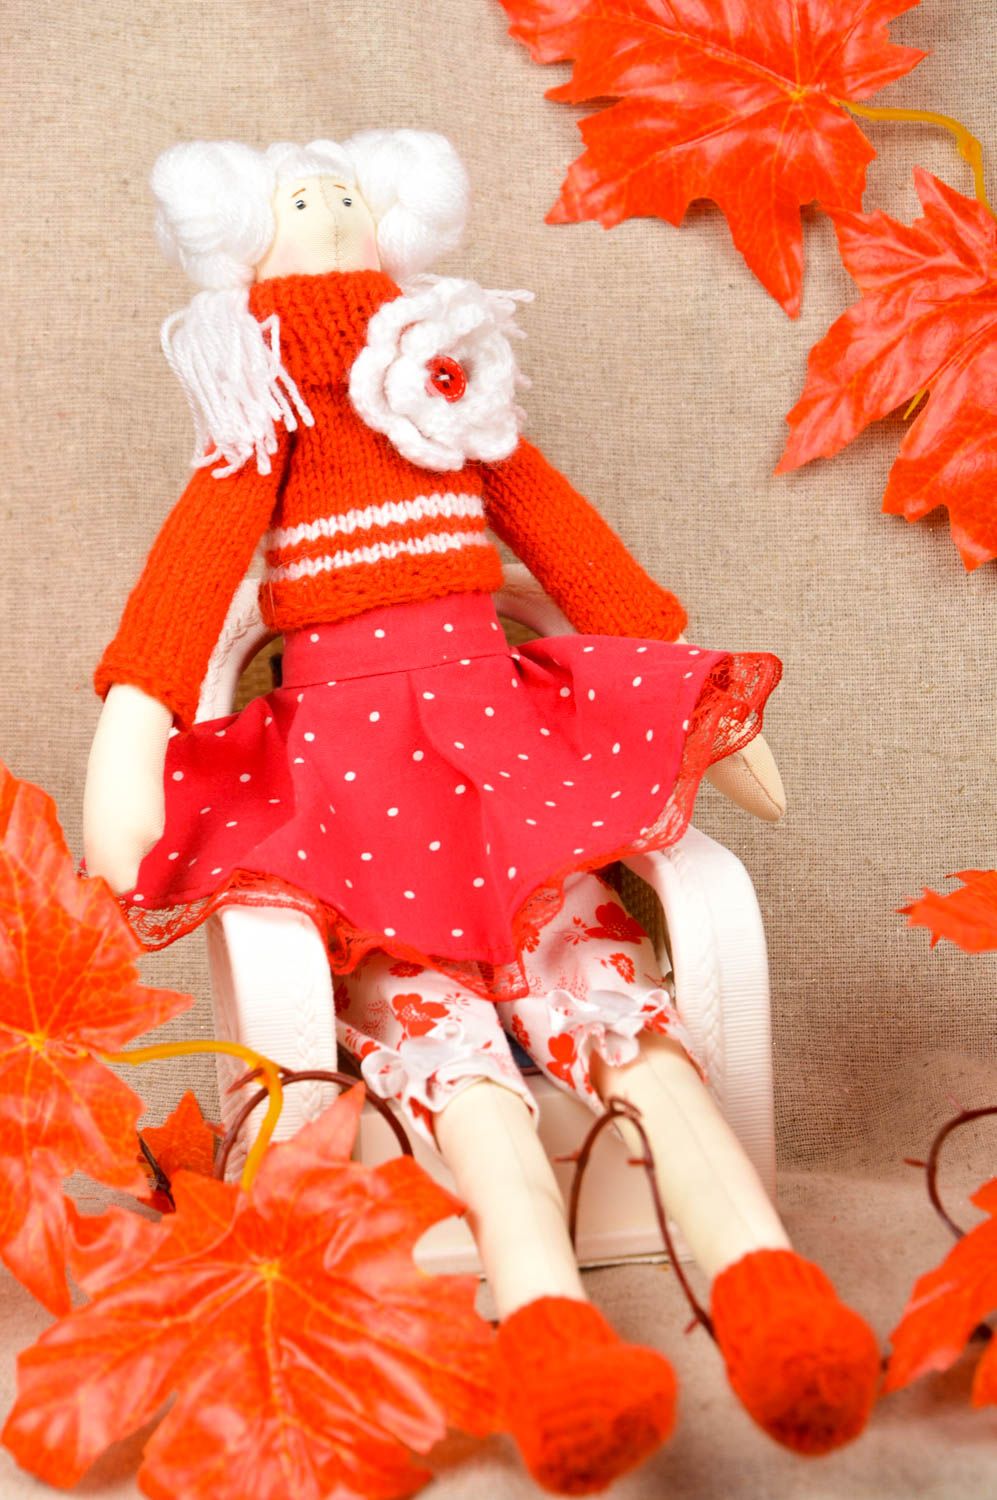 Rag doll handmade fabric toy fabric toy for children nursery decor ideas photo 1